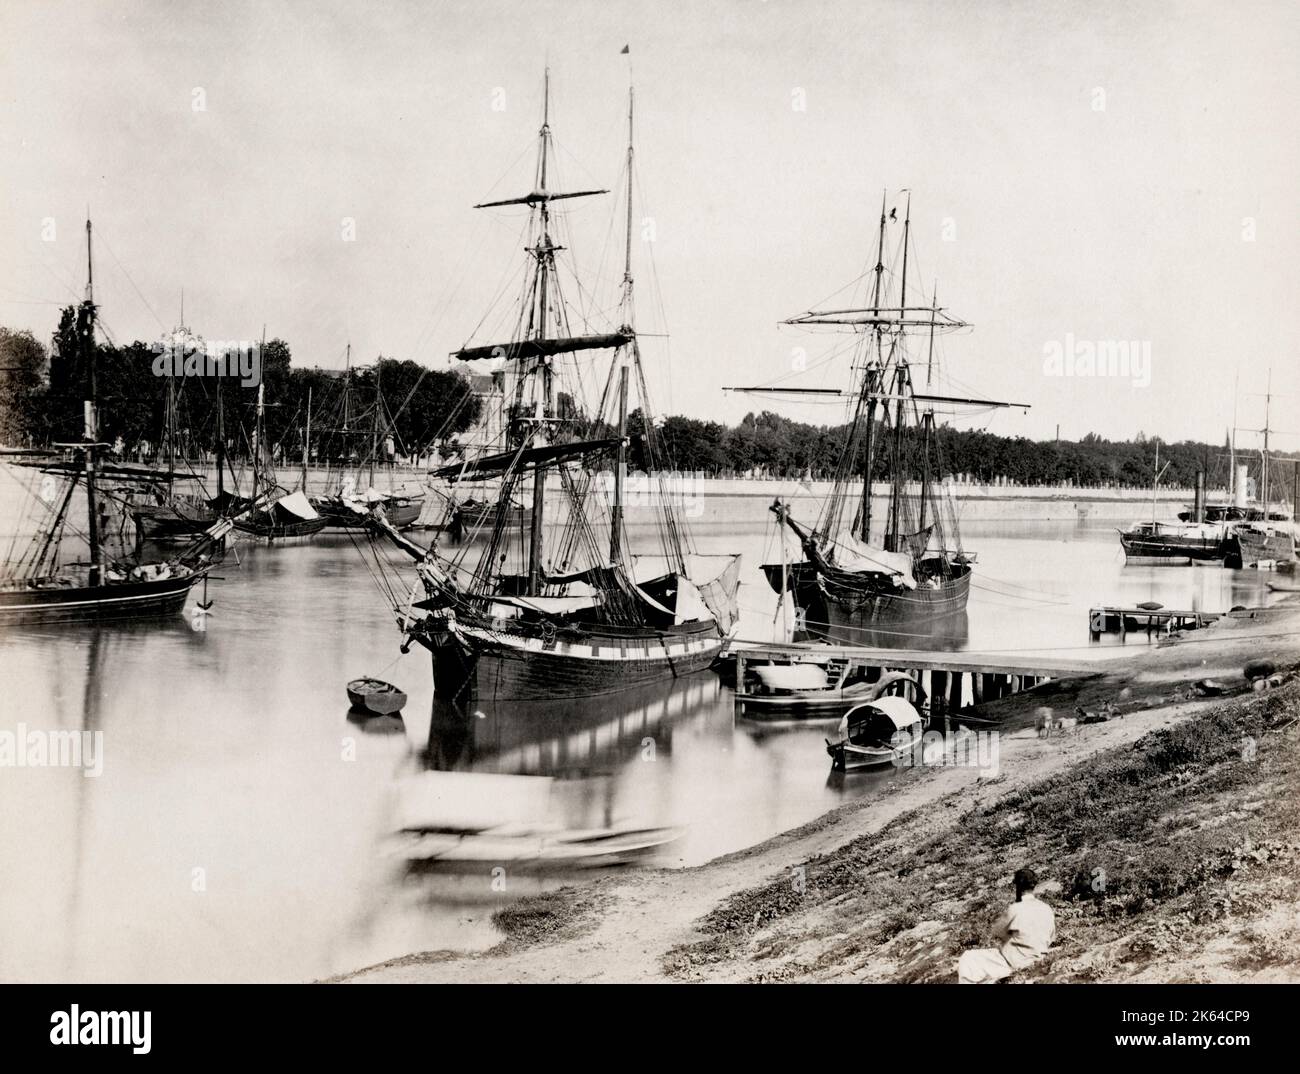 Vintage 19. Jahrhundert Foto - Schiffe entlang des Flusses gebunden, Sevilla, Spanien Stockfoto